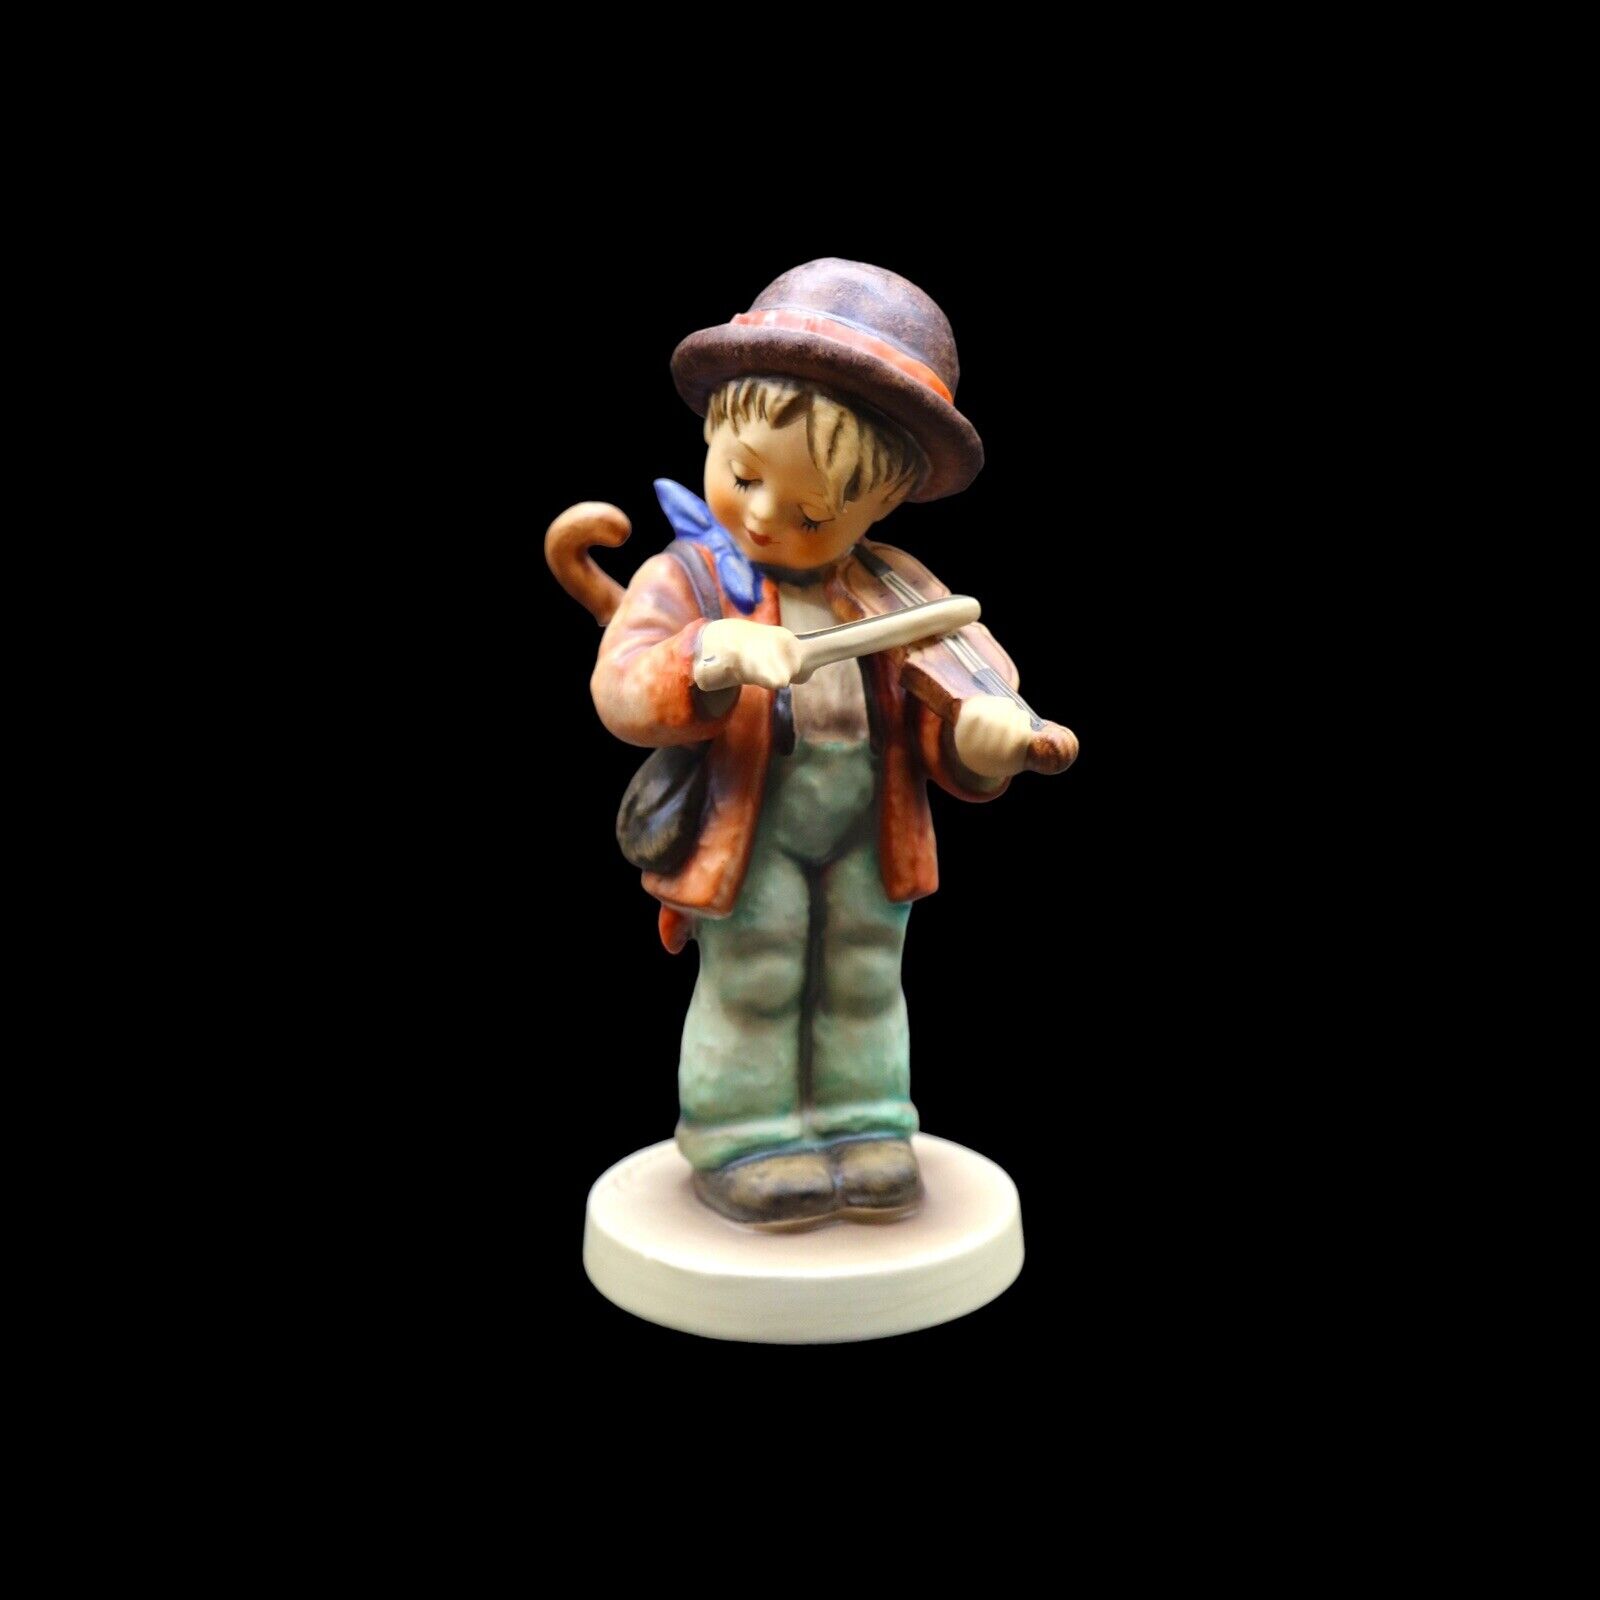 Goebel Hummel Porcelain “Little Fiddler” #2/0 Figurine - TMK6